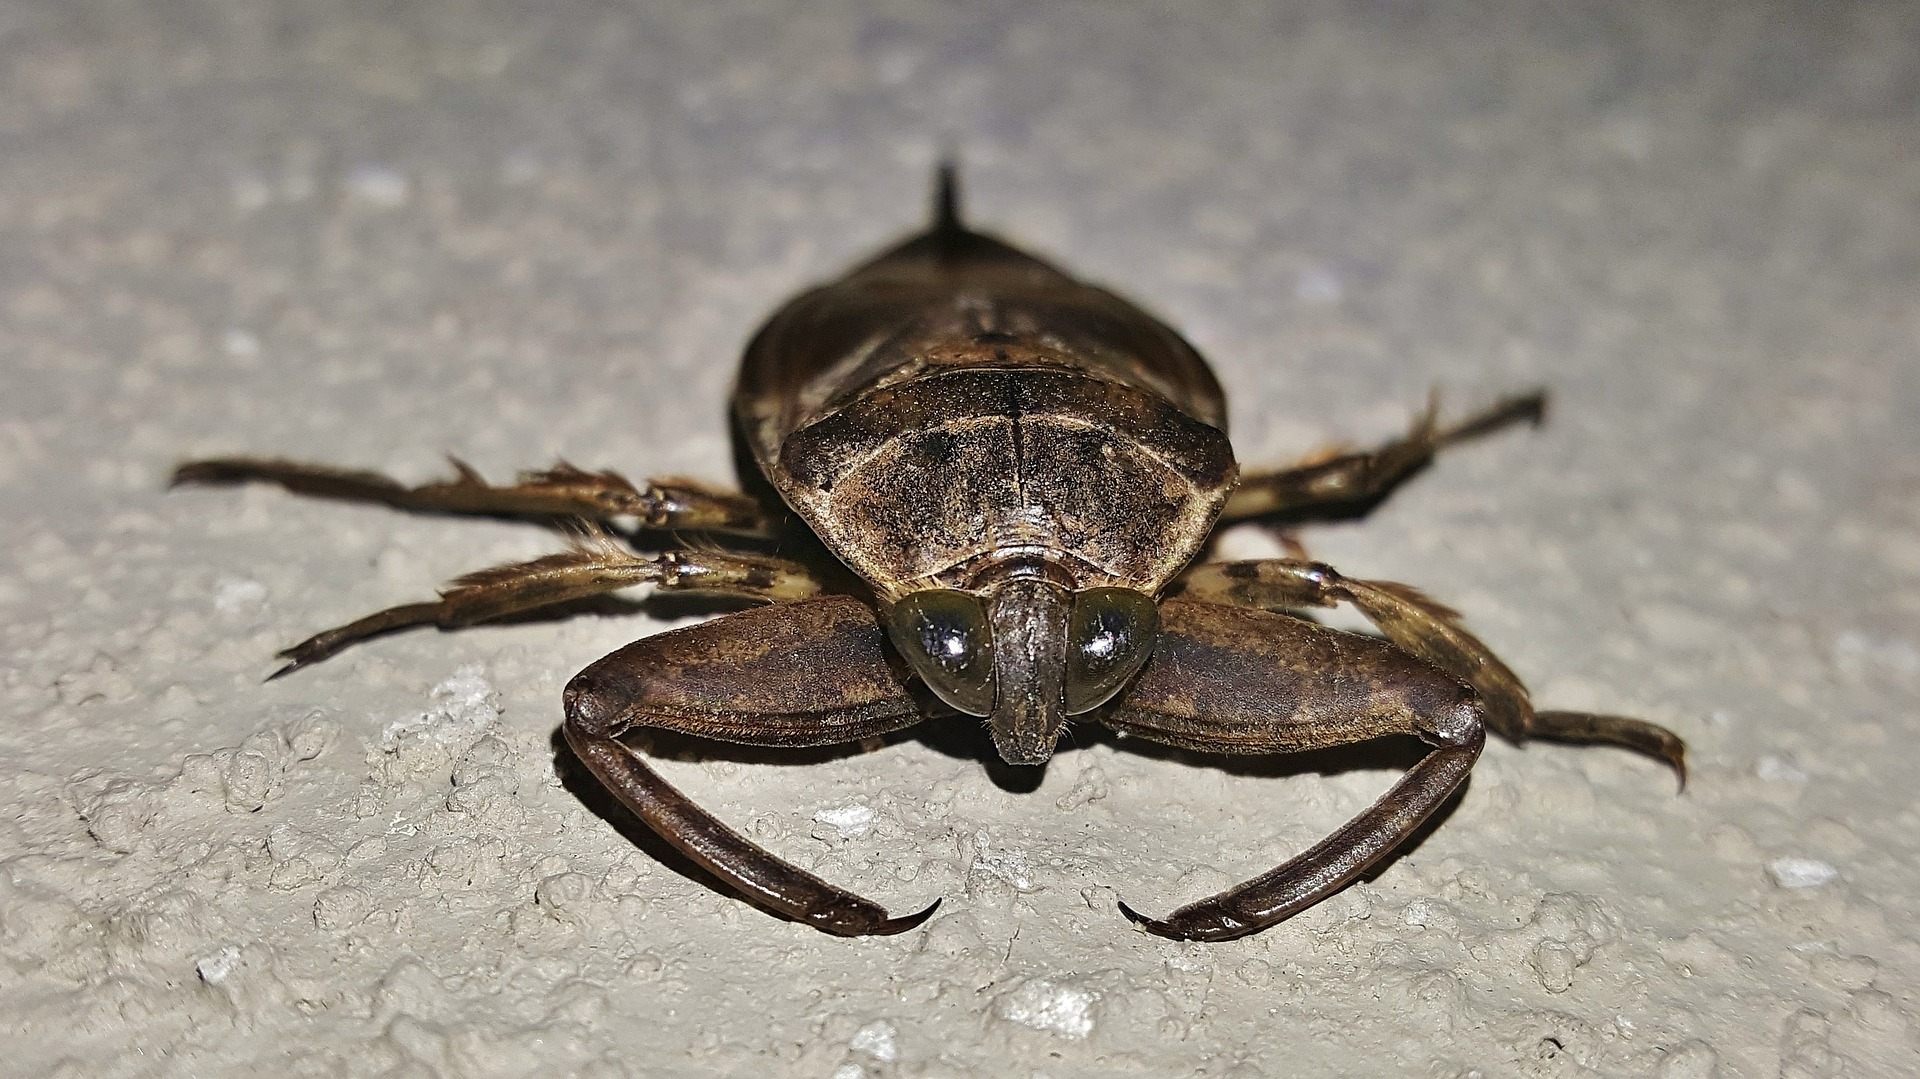 Waterbugs are large, ovoid-shaped bugs